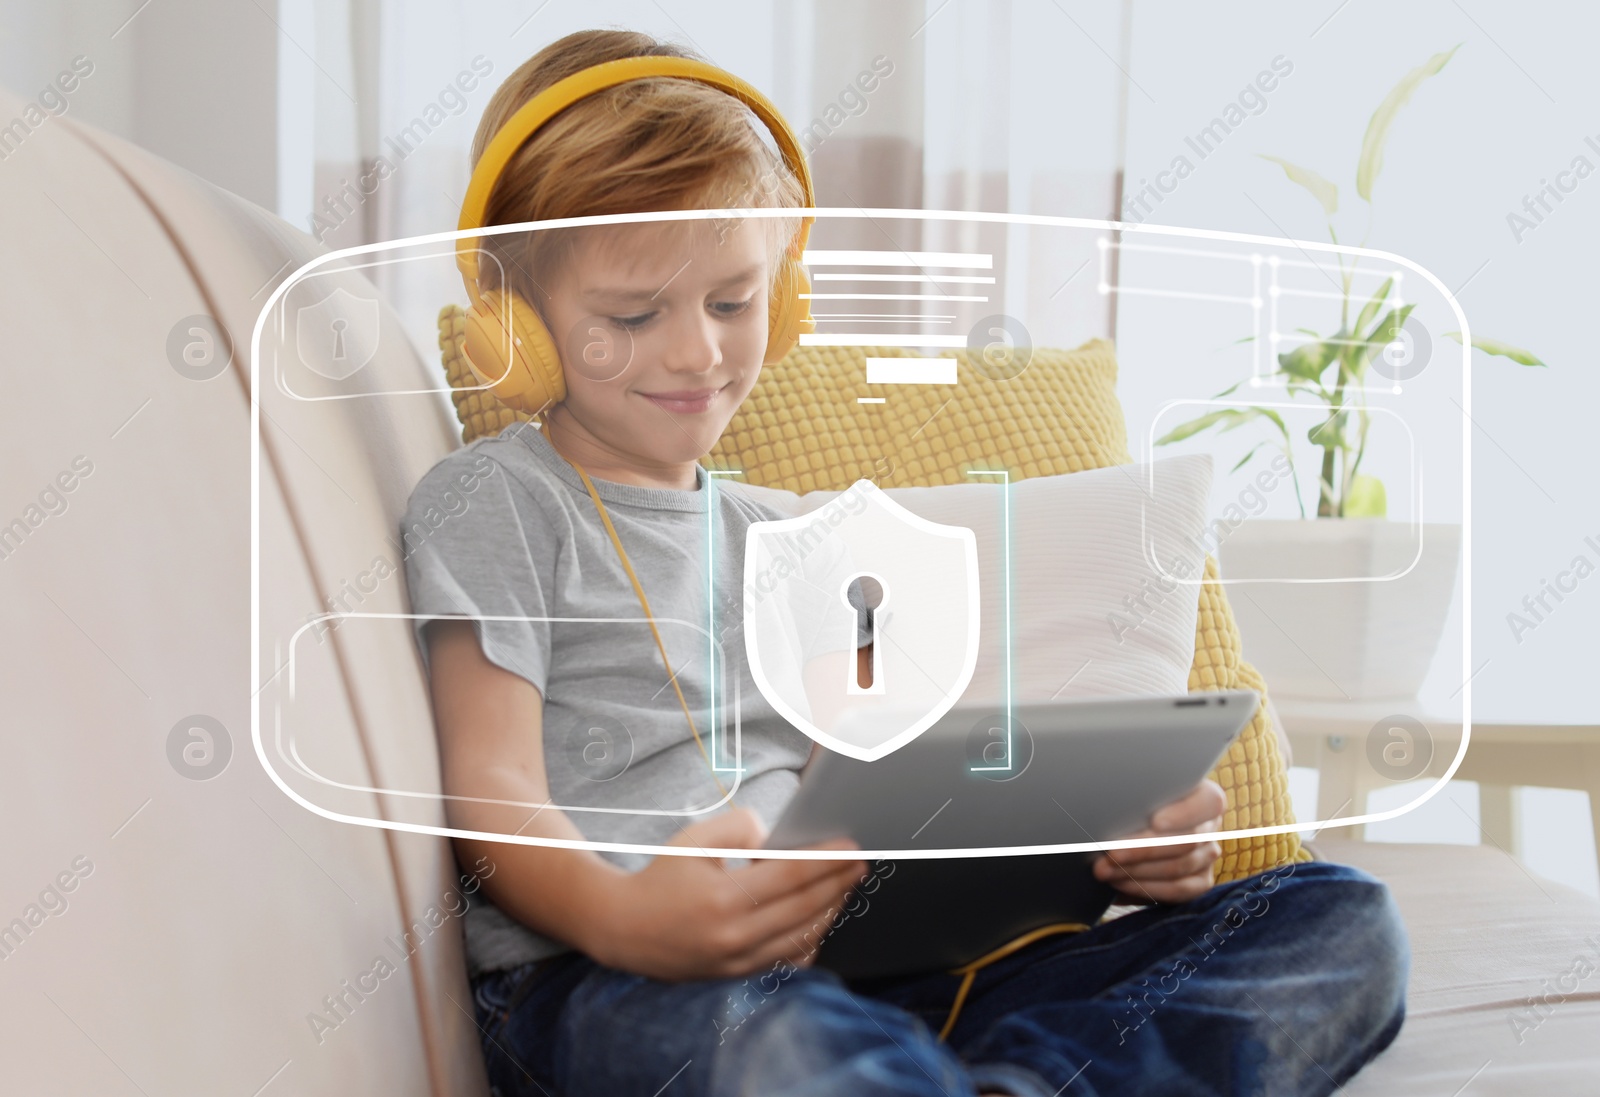 Image of Child safety online. Little boy using tablet at home. Illustration of internet blocking app on foreground